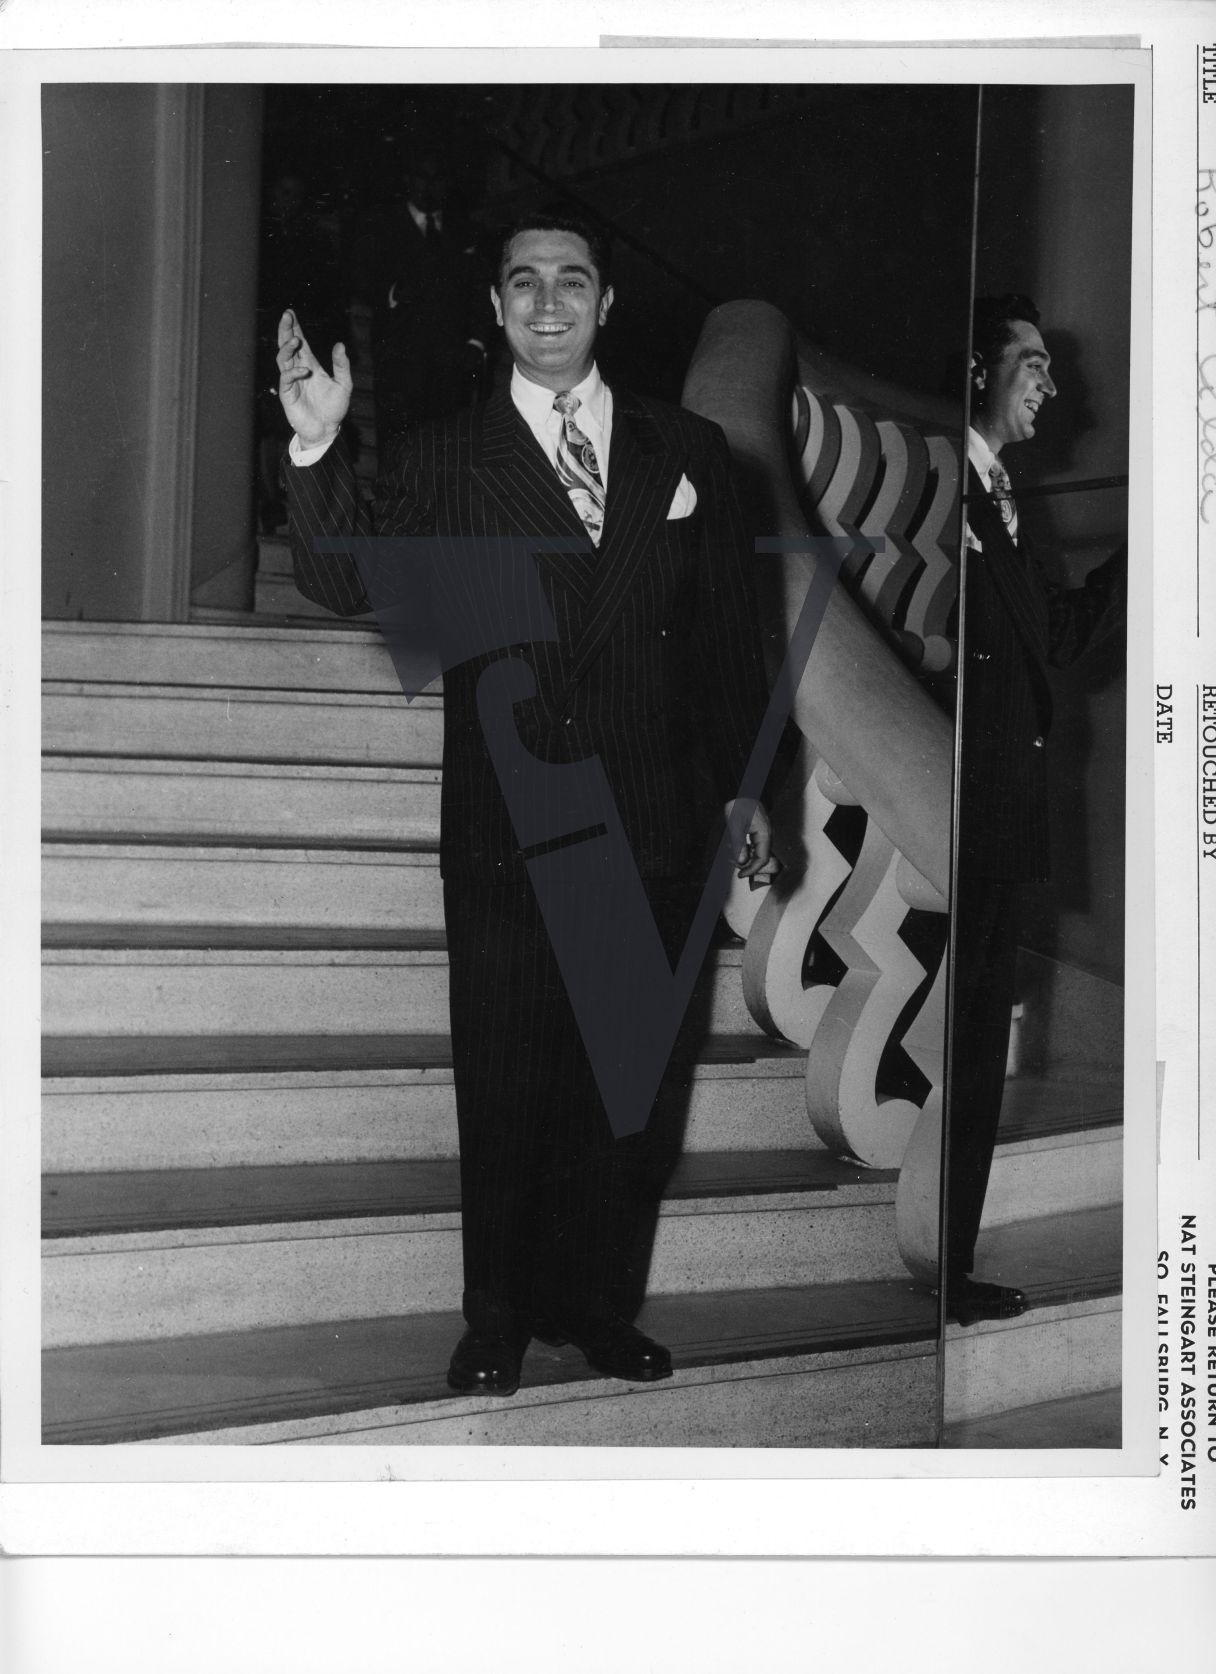 Robert Alda, actor, staircase, waving, portrait, full shot.